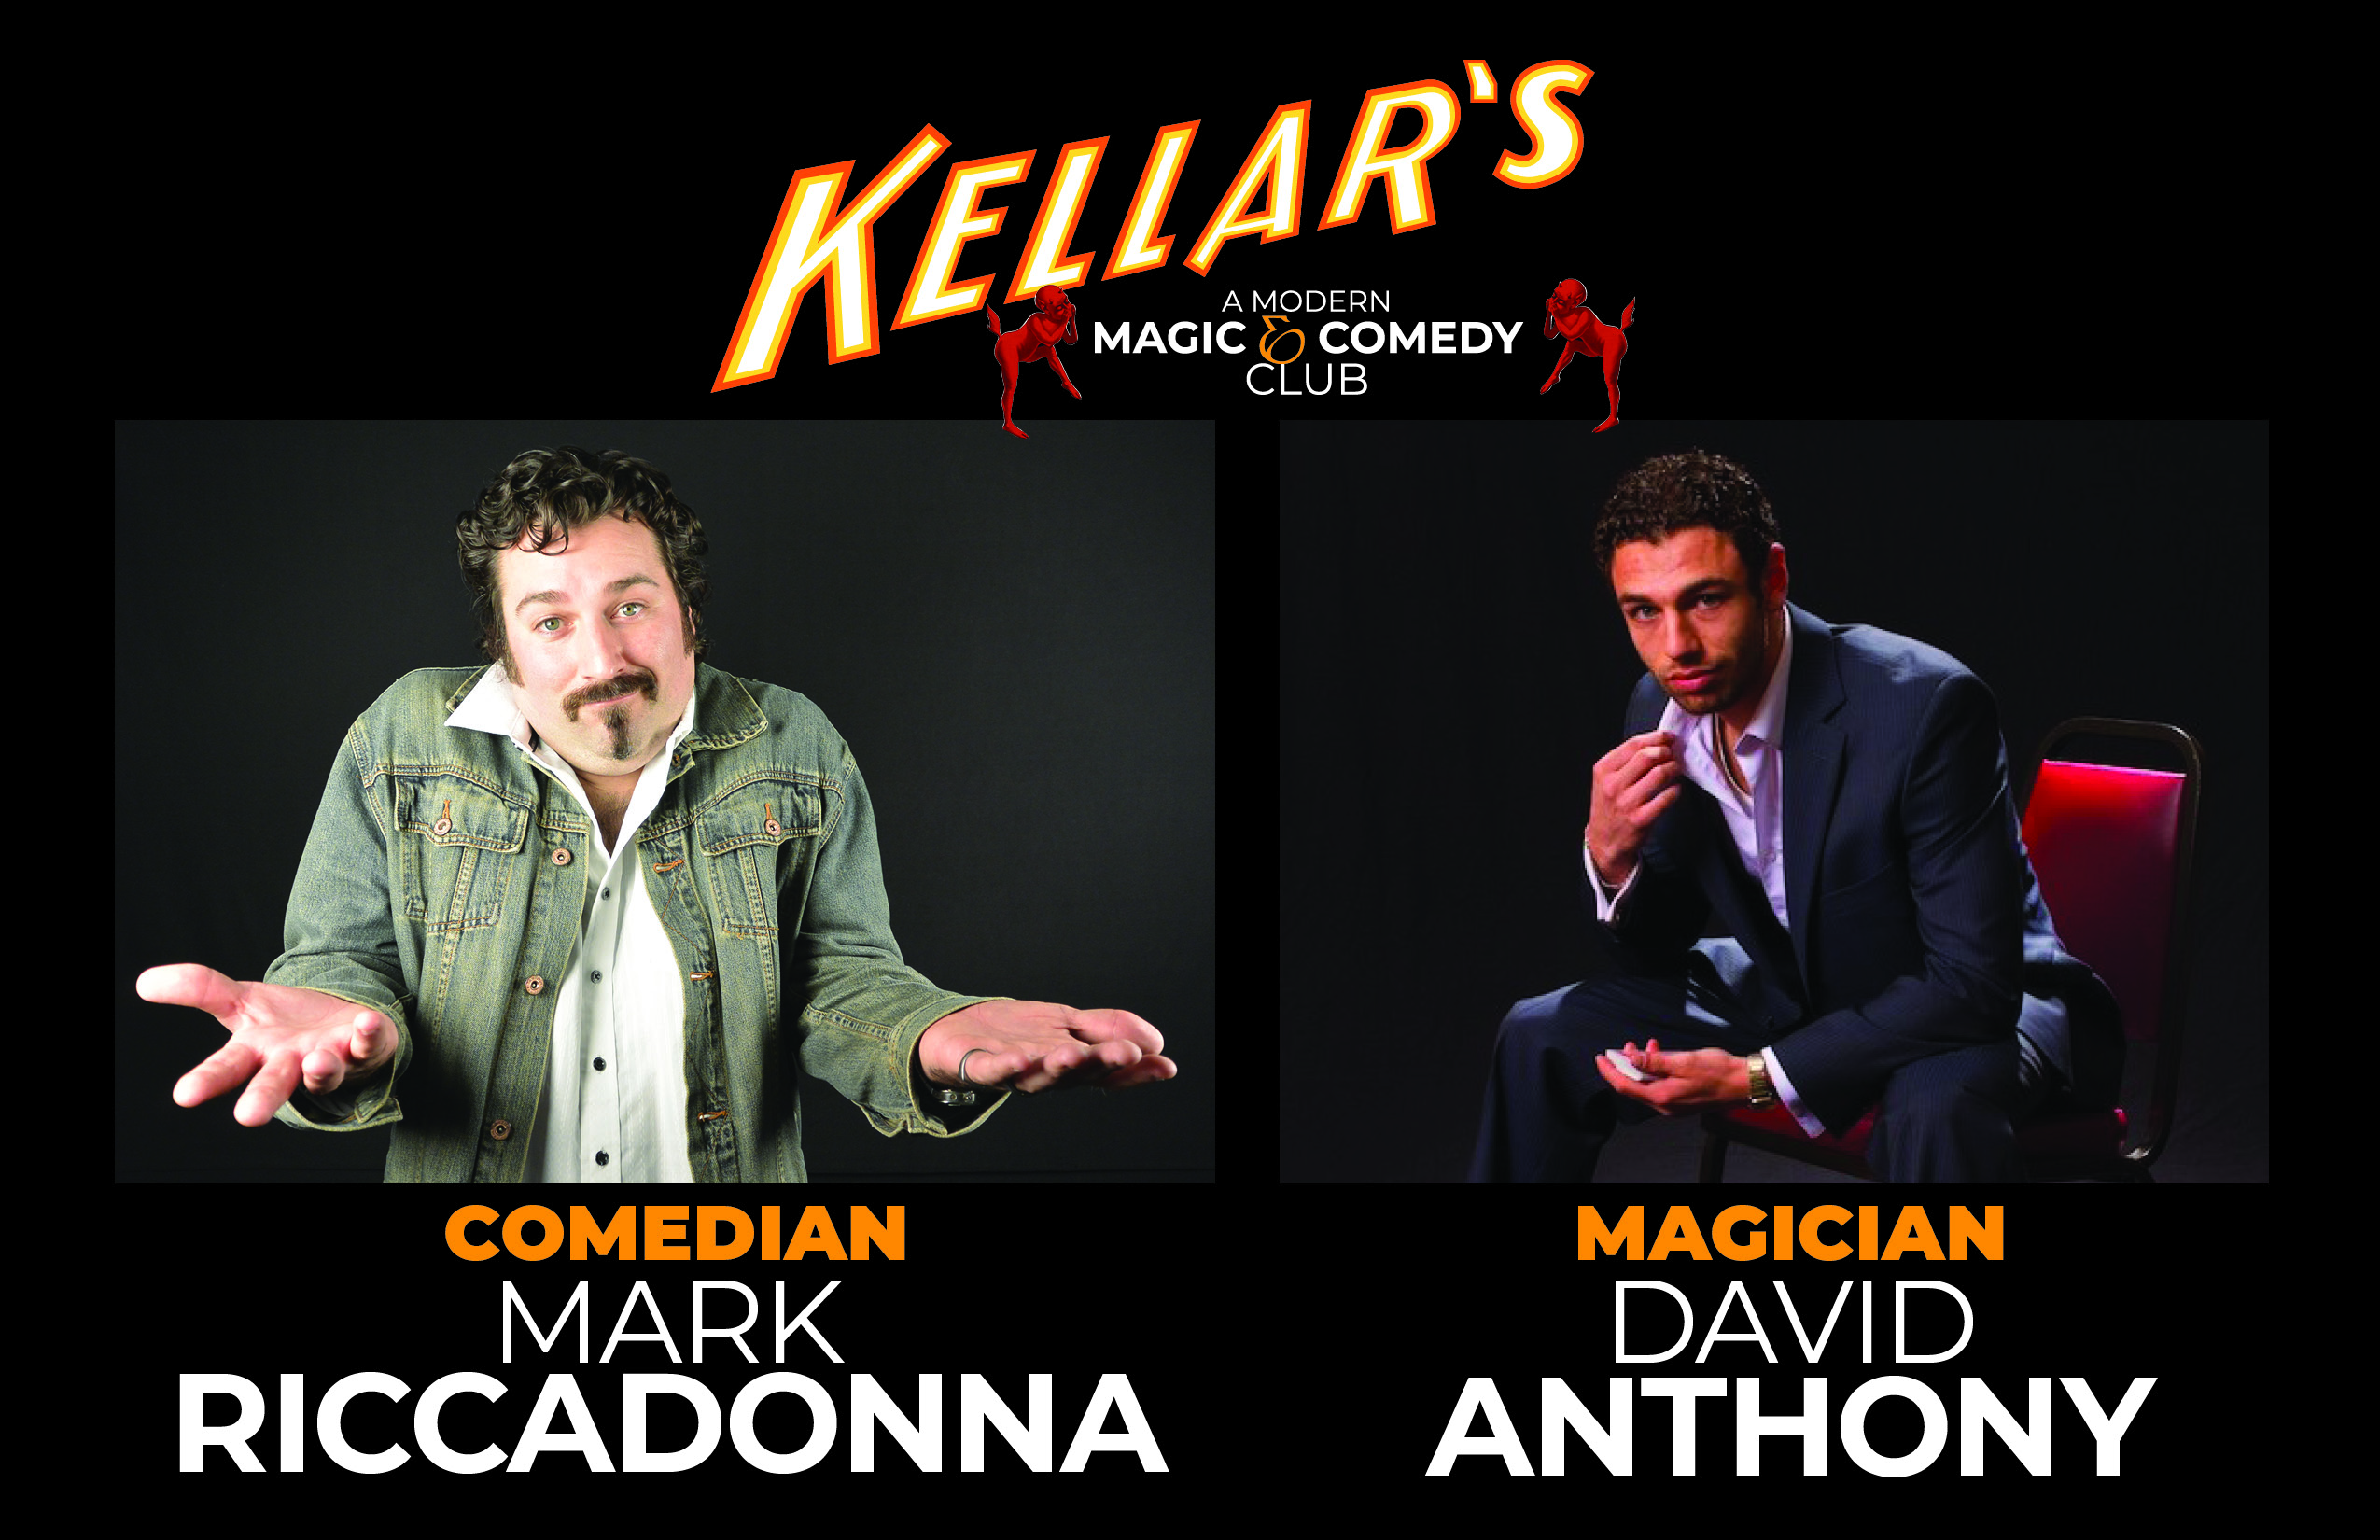 Kellar's Magic & Comedy Club presents DAVID ANTHONY & MARK RICCADONNA